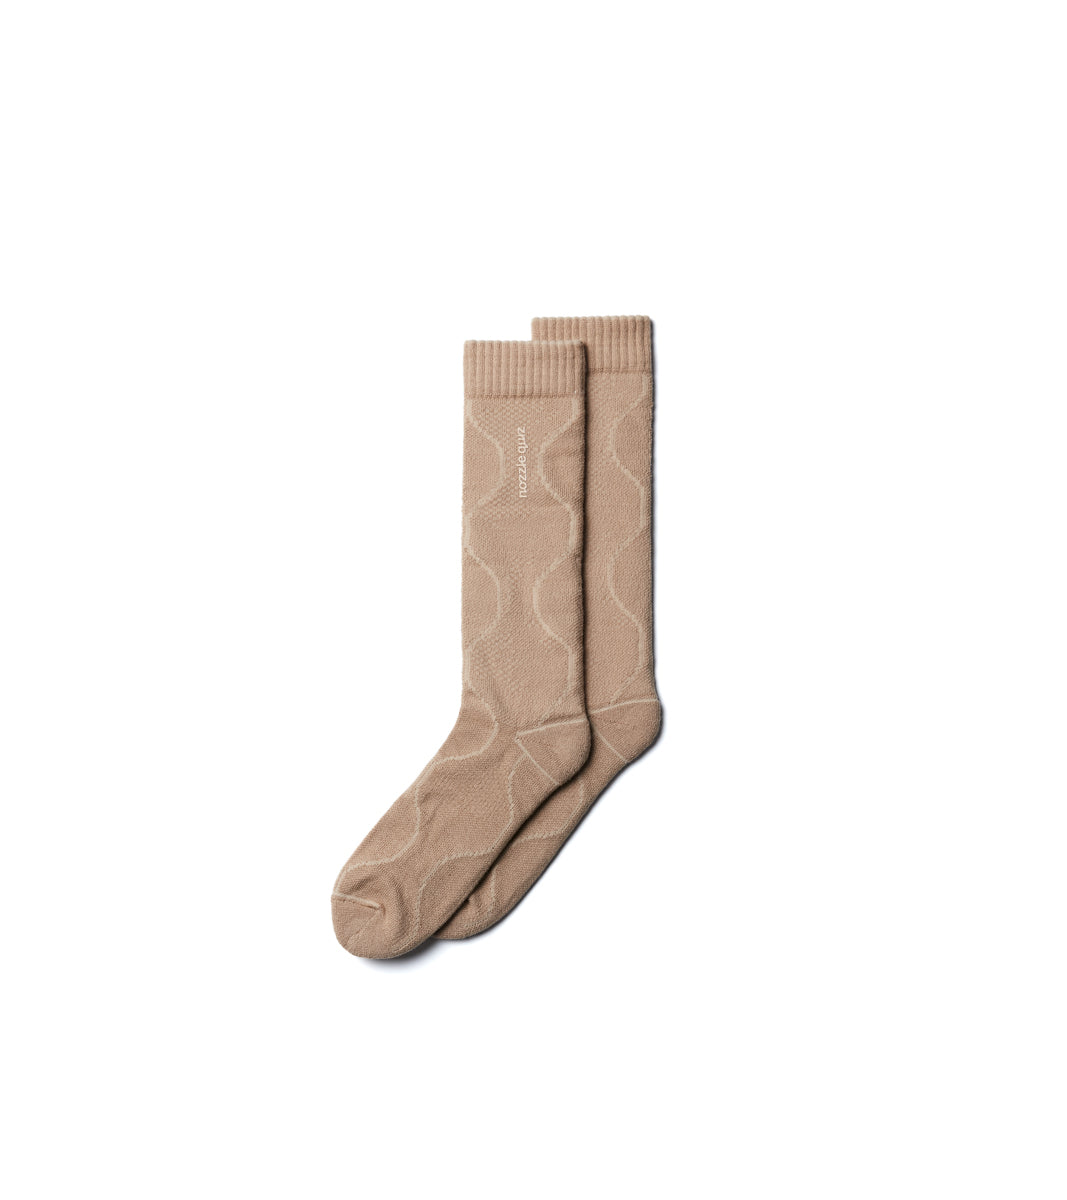 Digit No. casual cuff socks - Quilted Brn